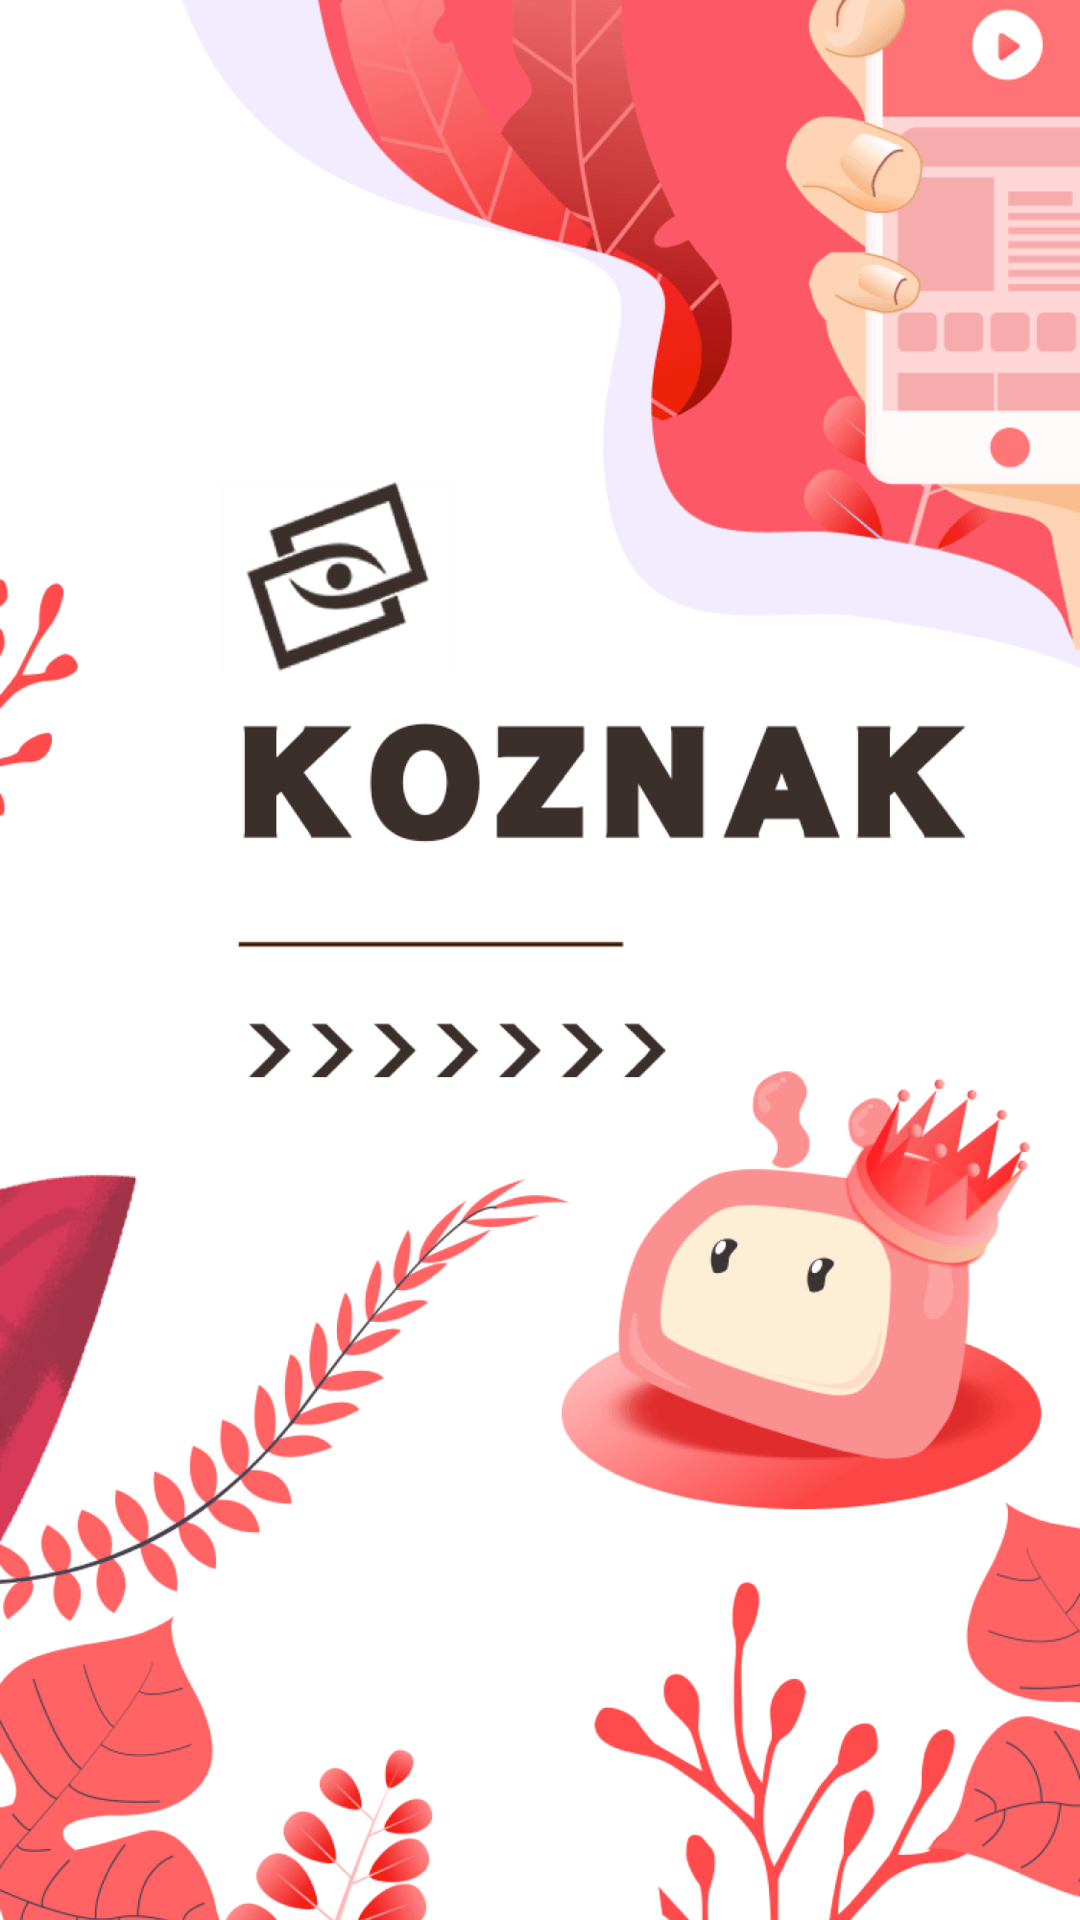 koznak2014版